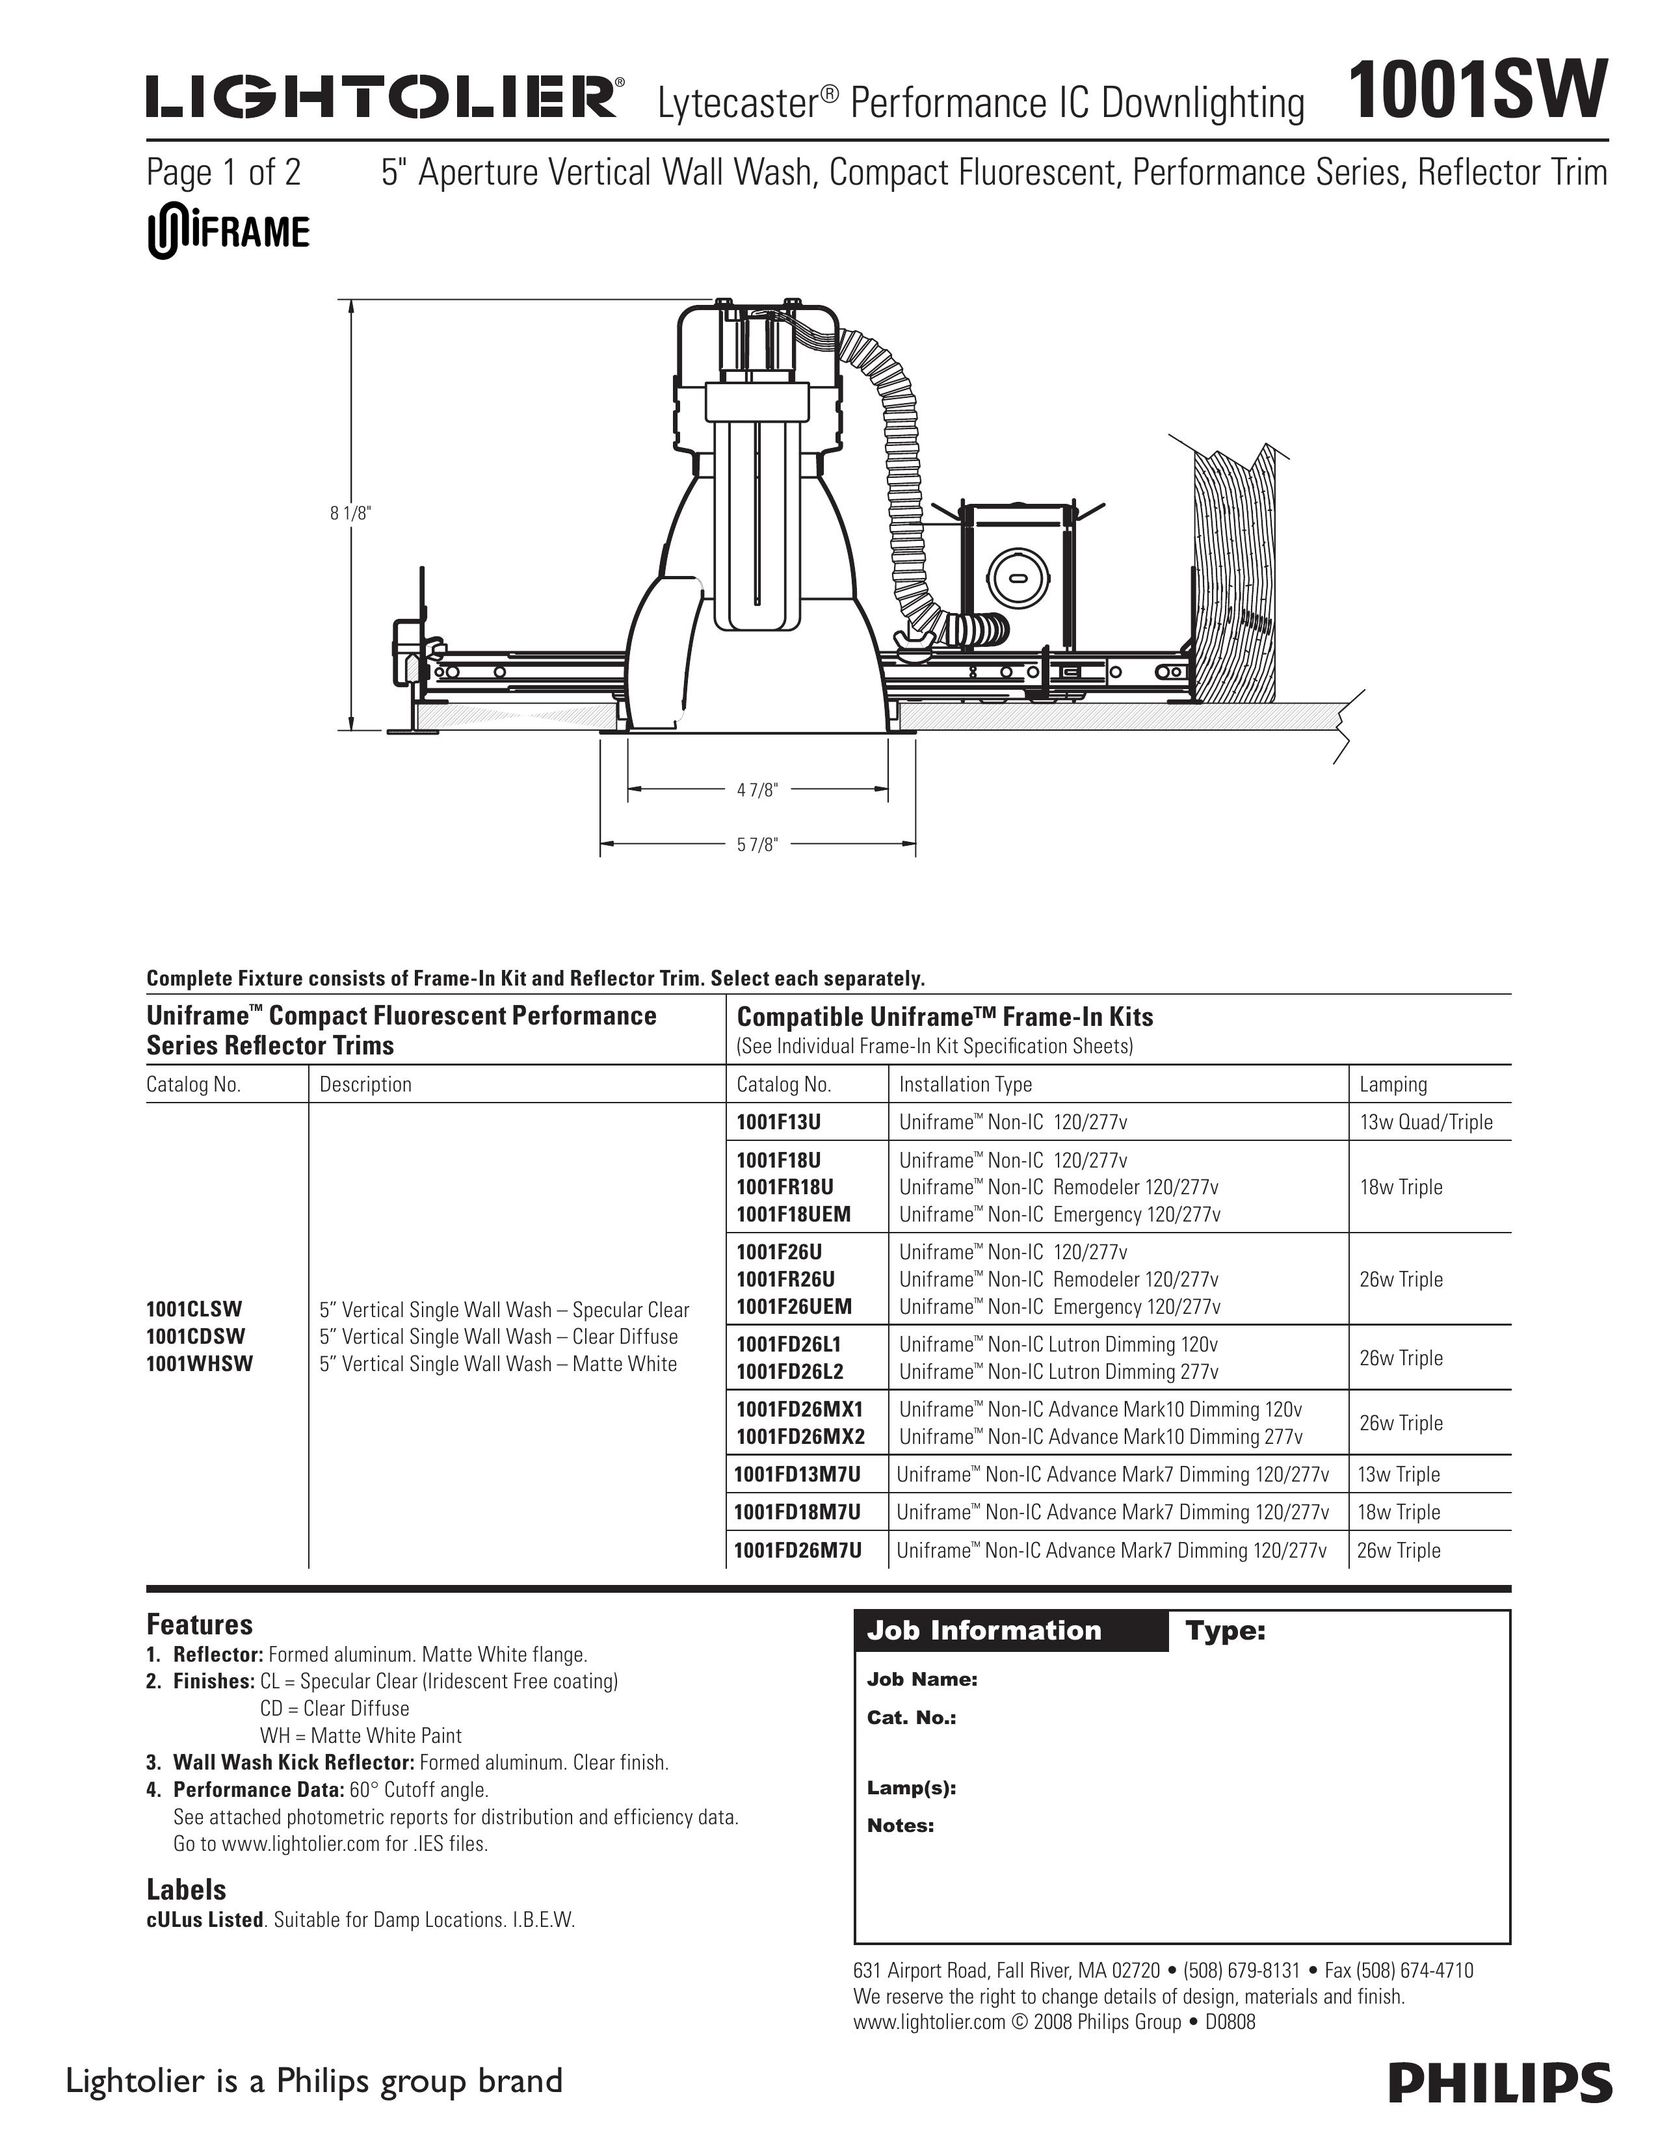 Lightolier 1001SW Indoor Furnishings User Manual